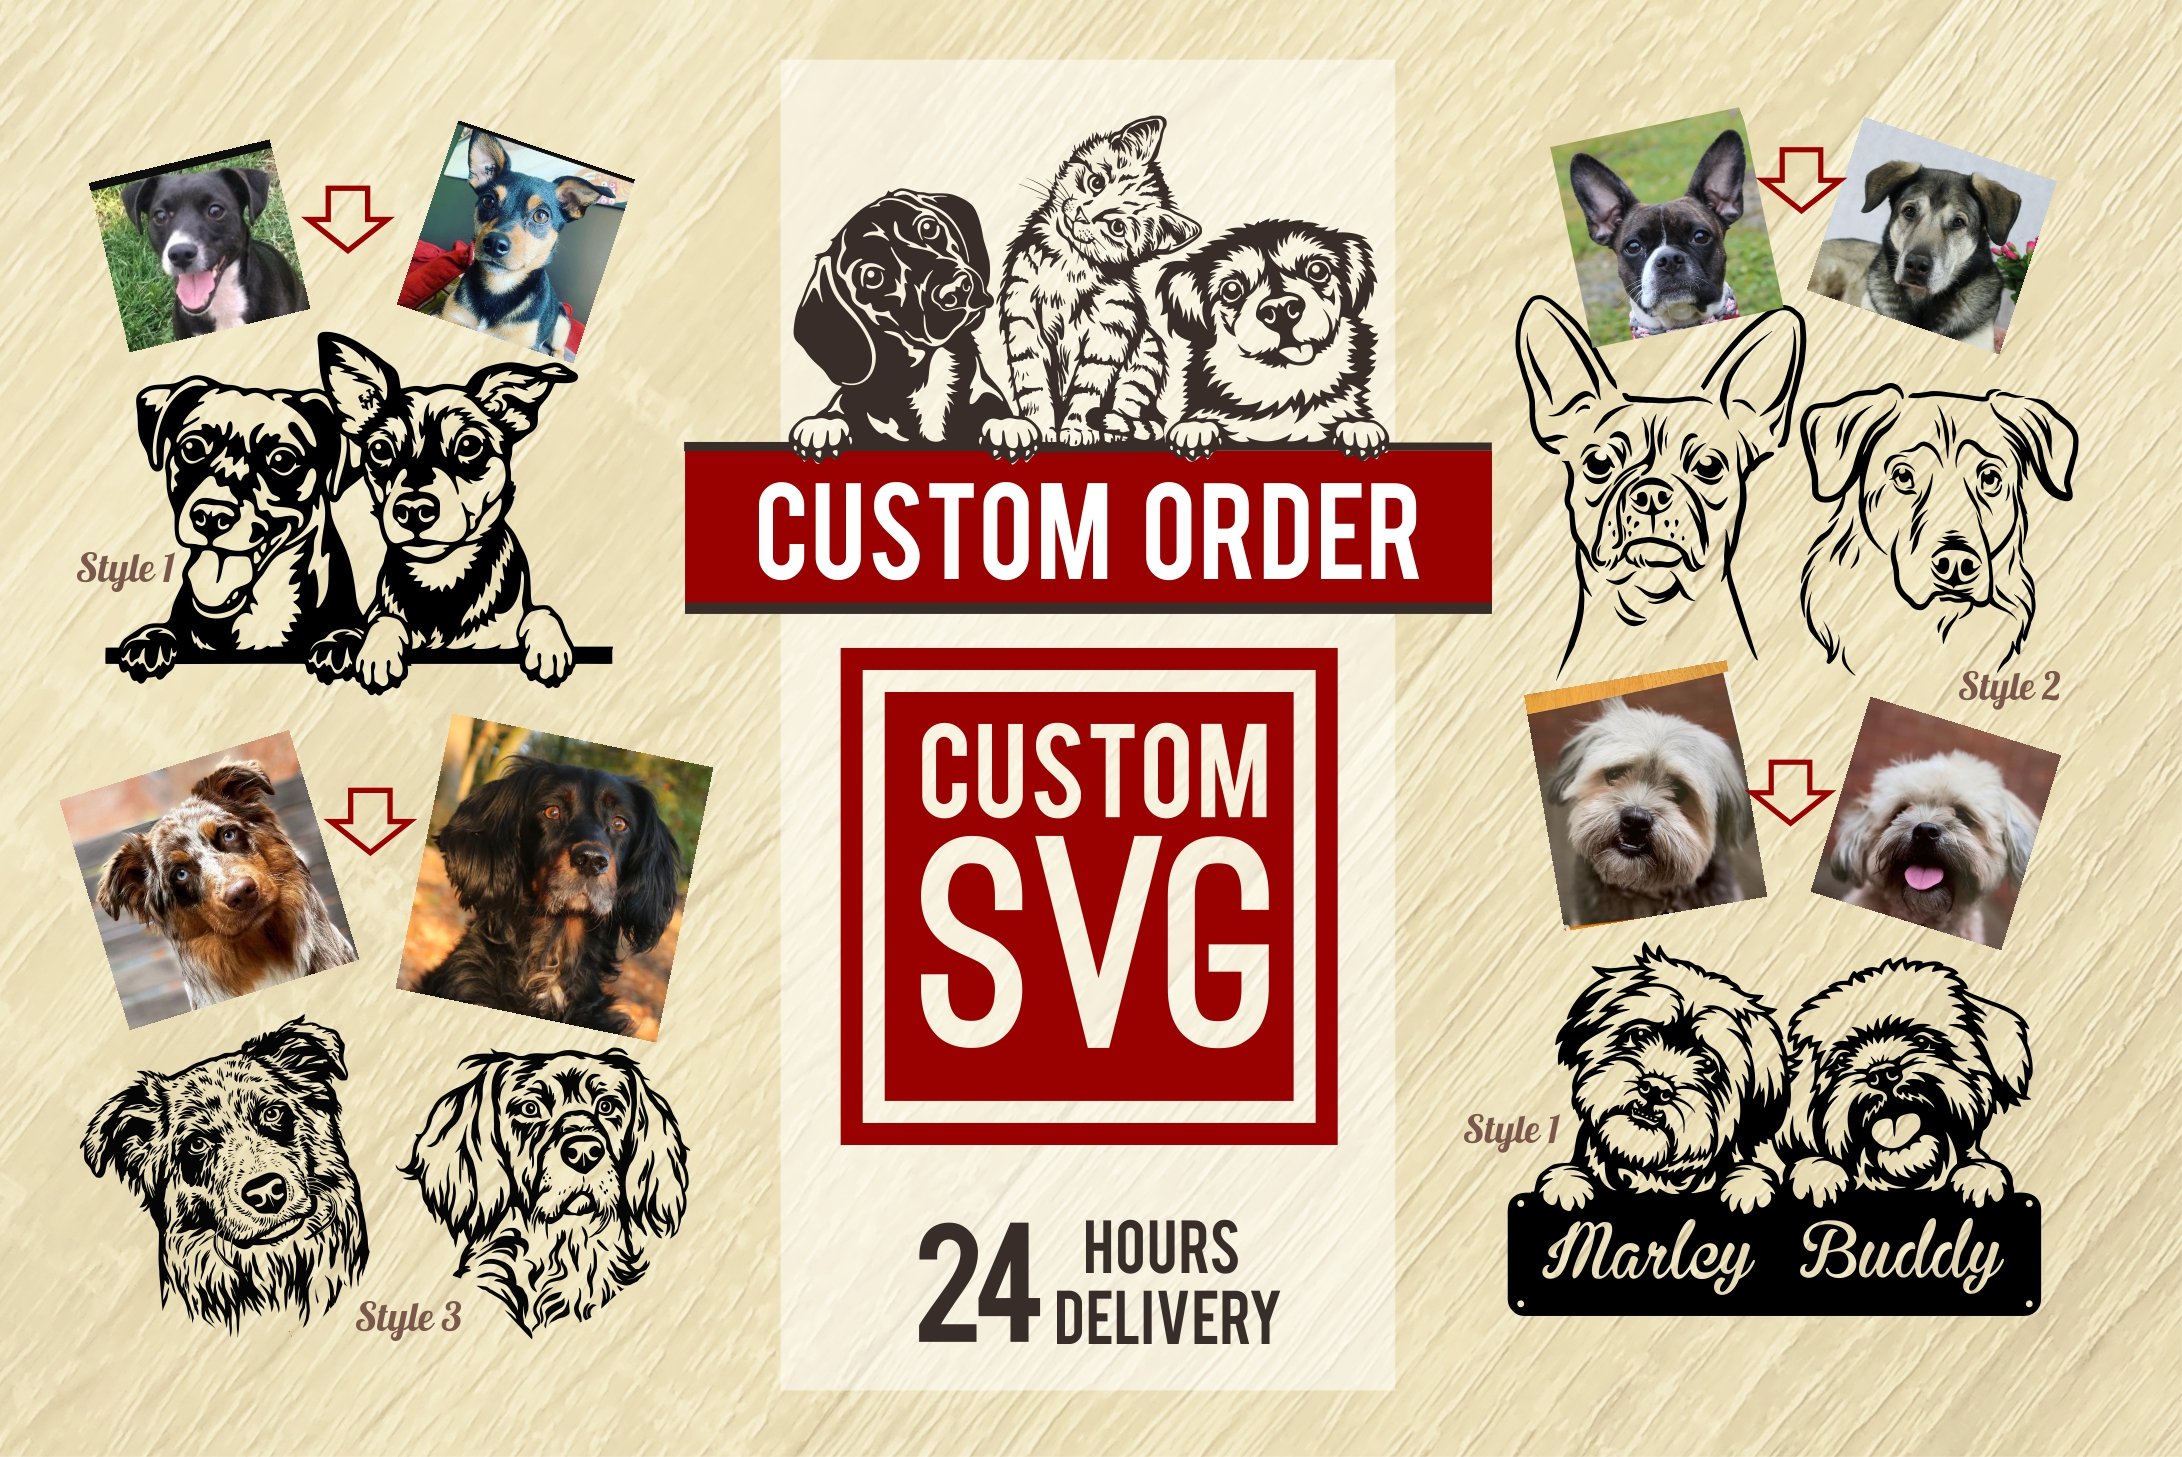 pets custom order service 281229 588